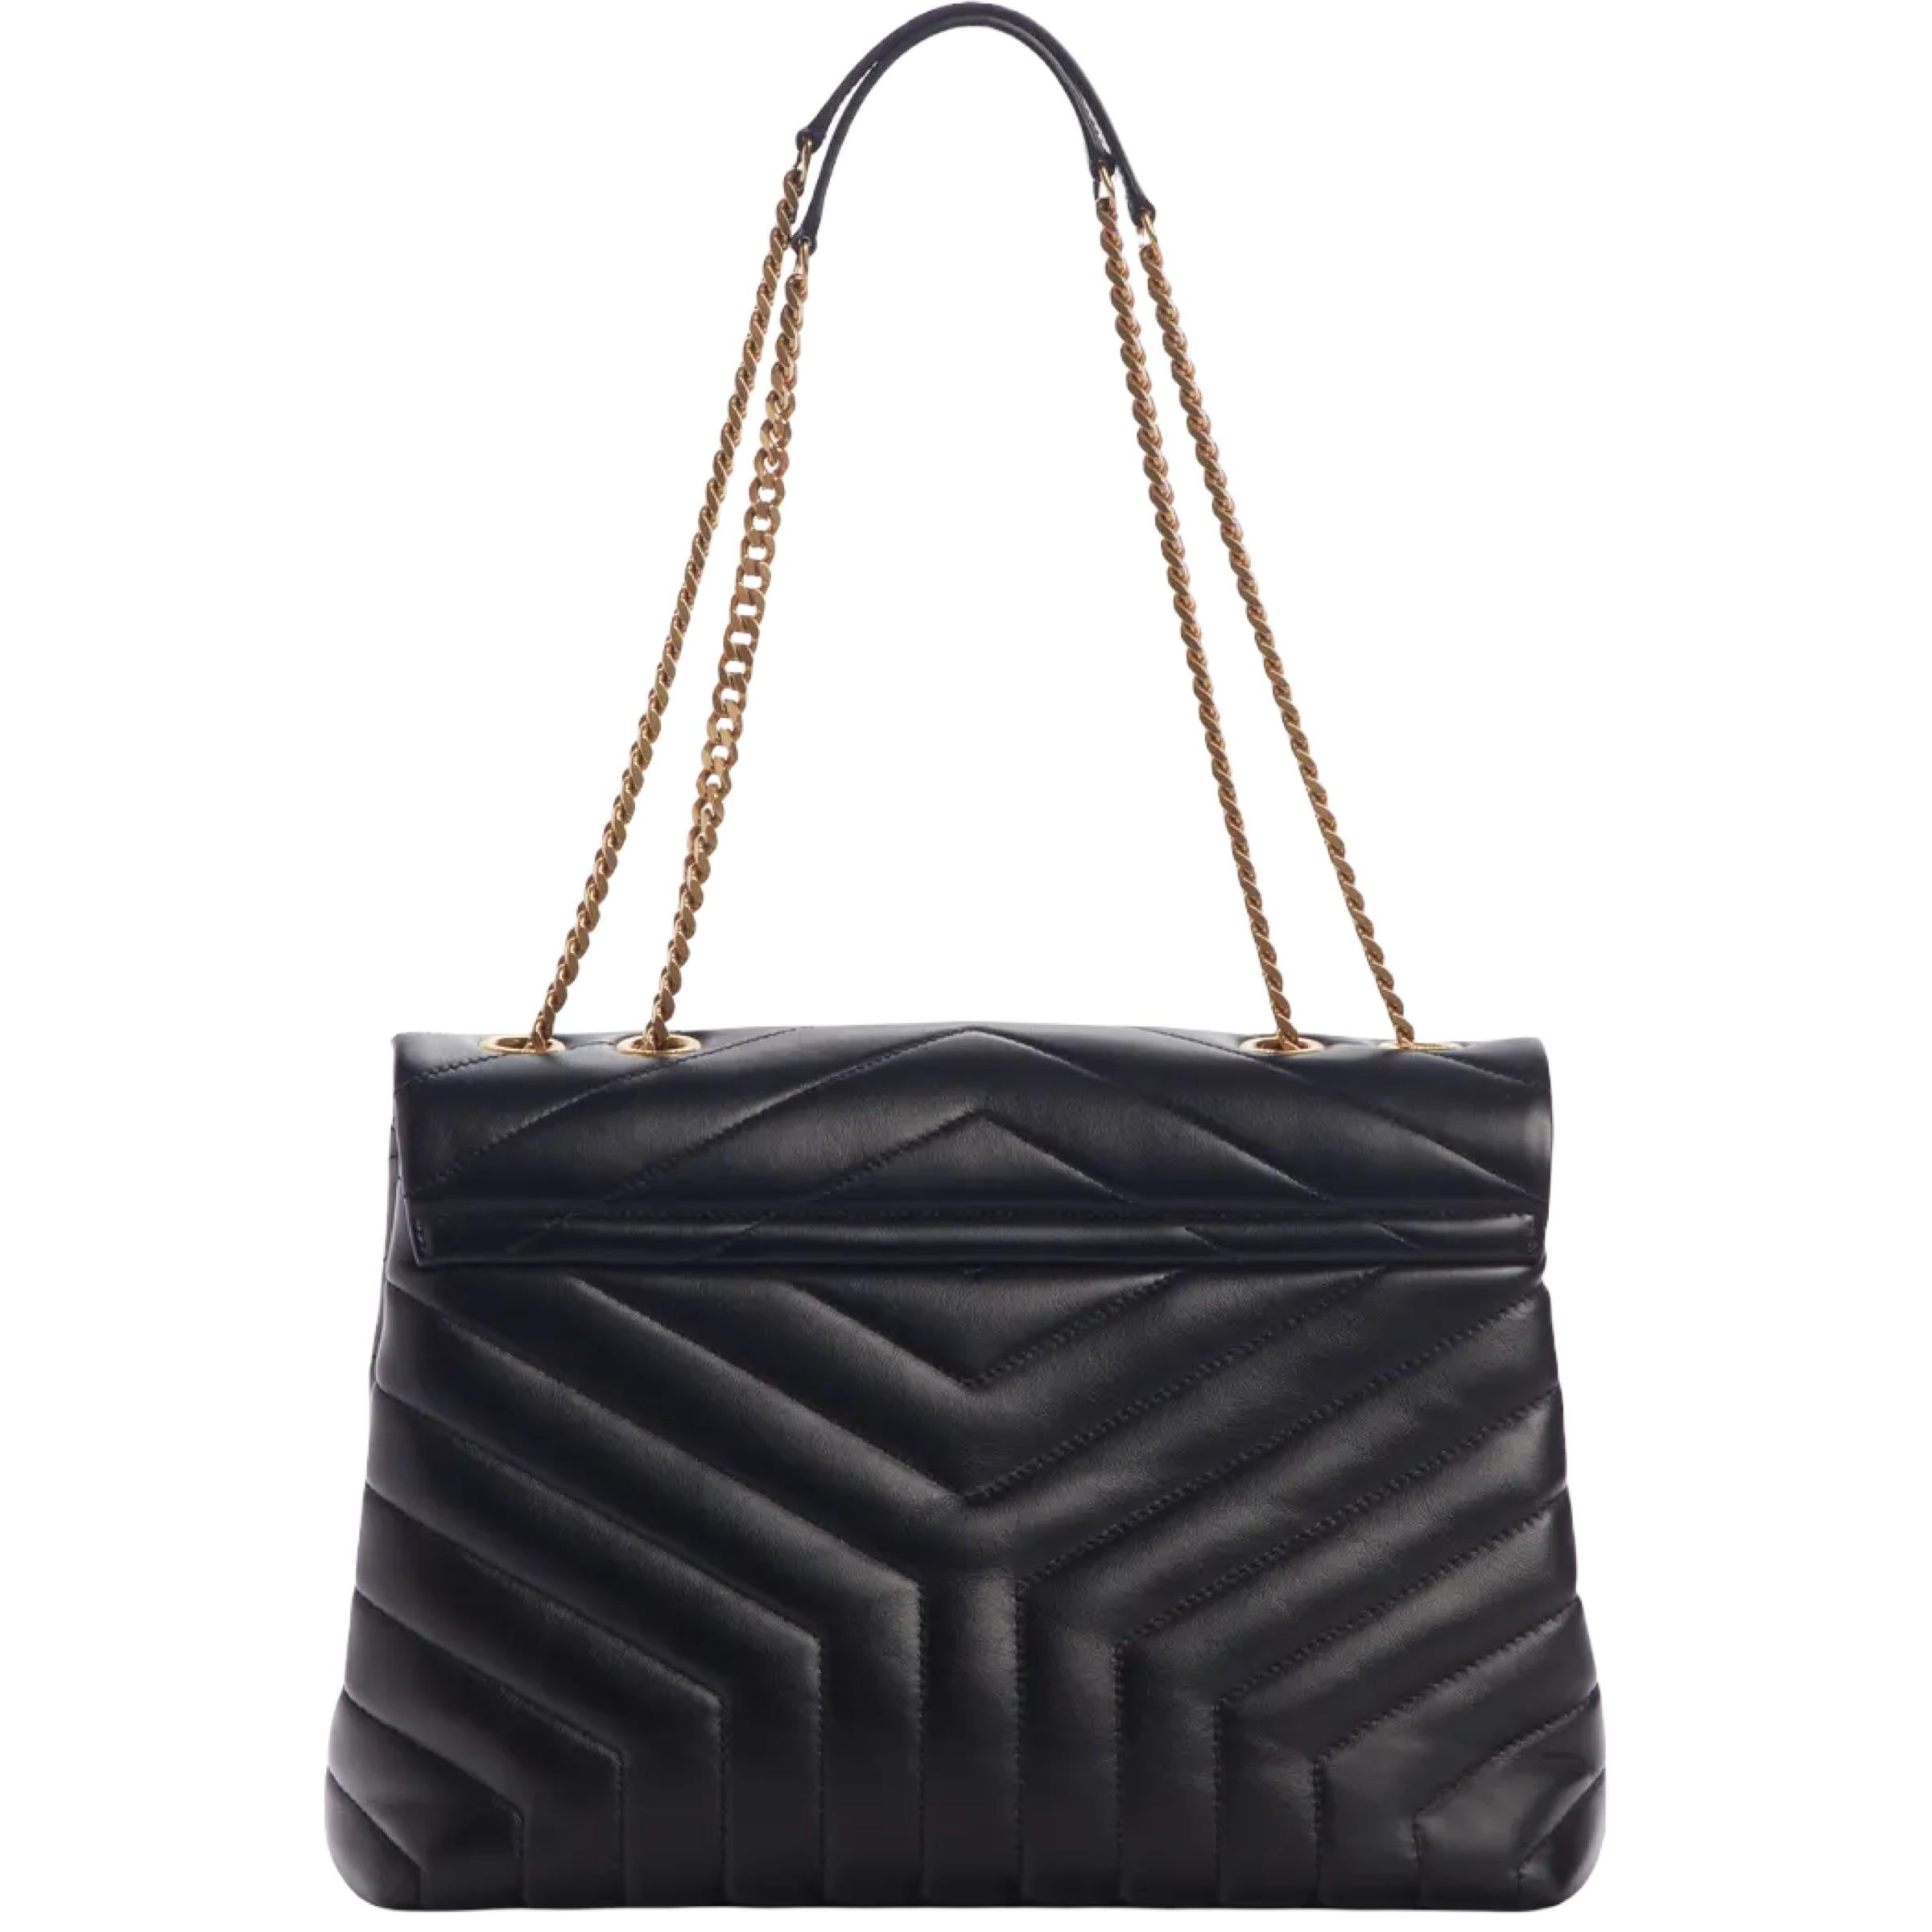 NEW Saint Laurent Black Medium Loulou Quilted Leather Shoulder Bag For Sale 4